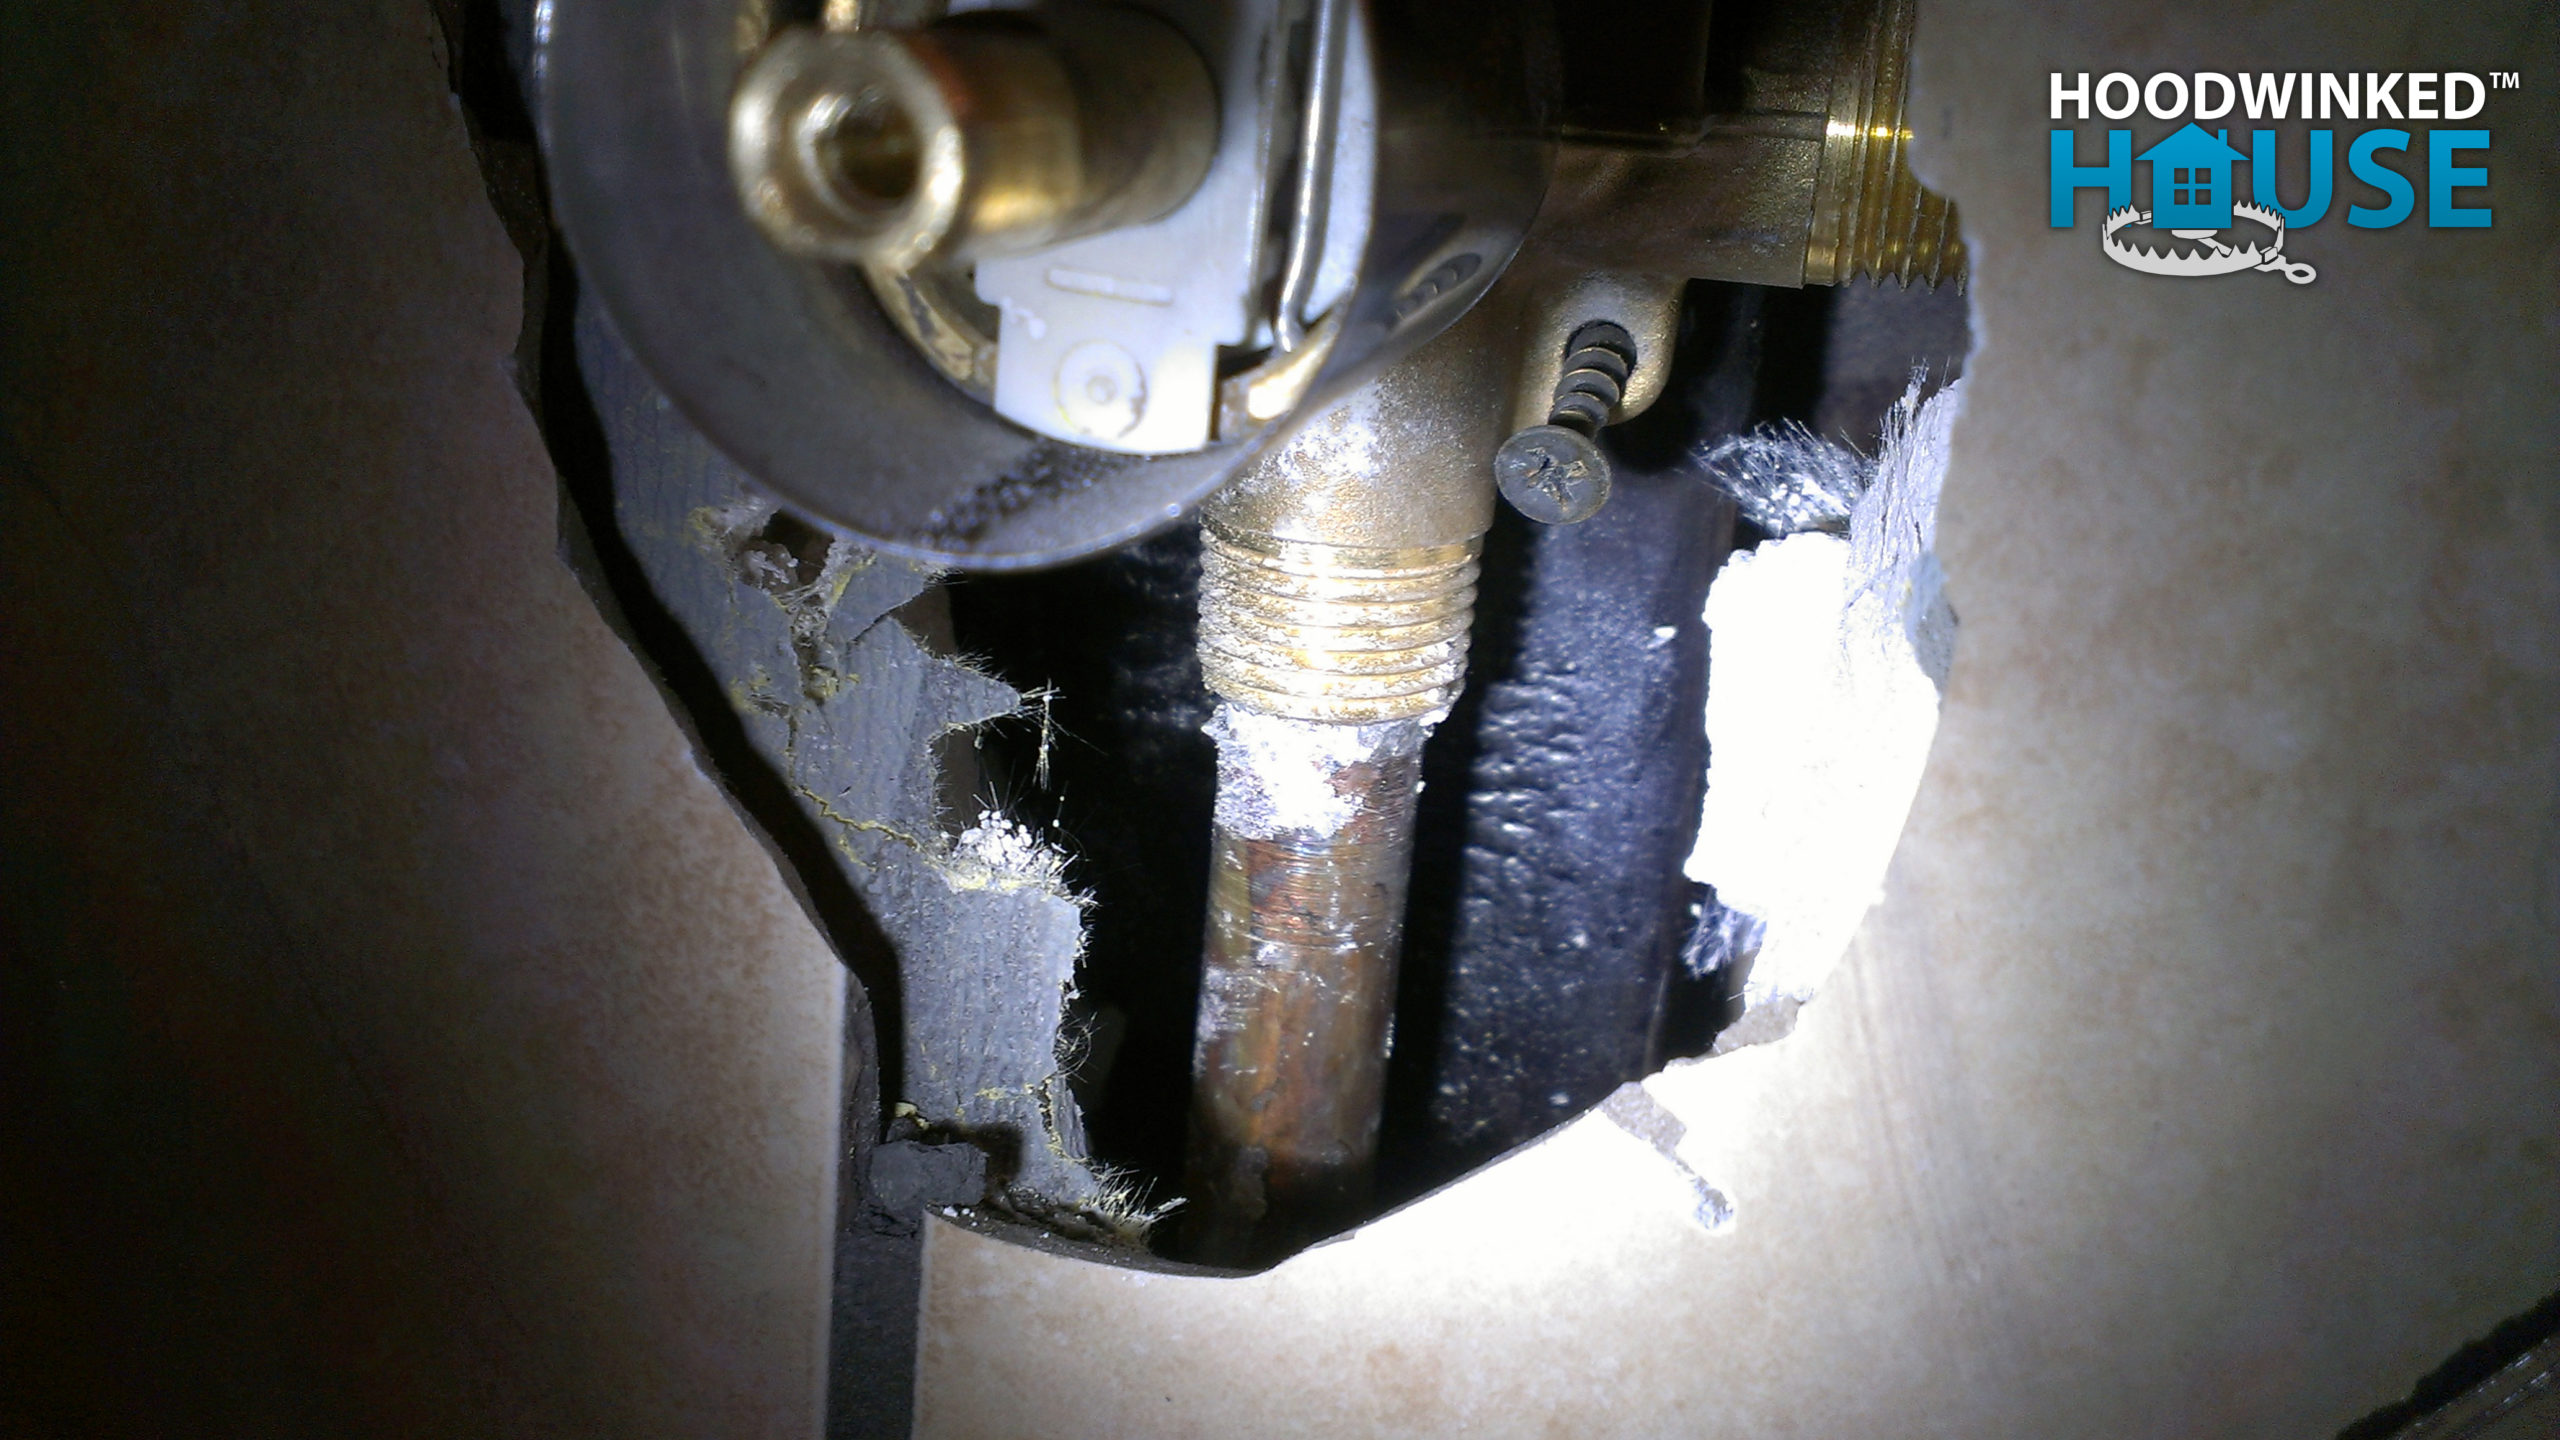 Badly burnt framing behind shower control manifold. 